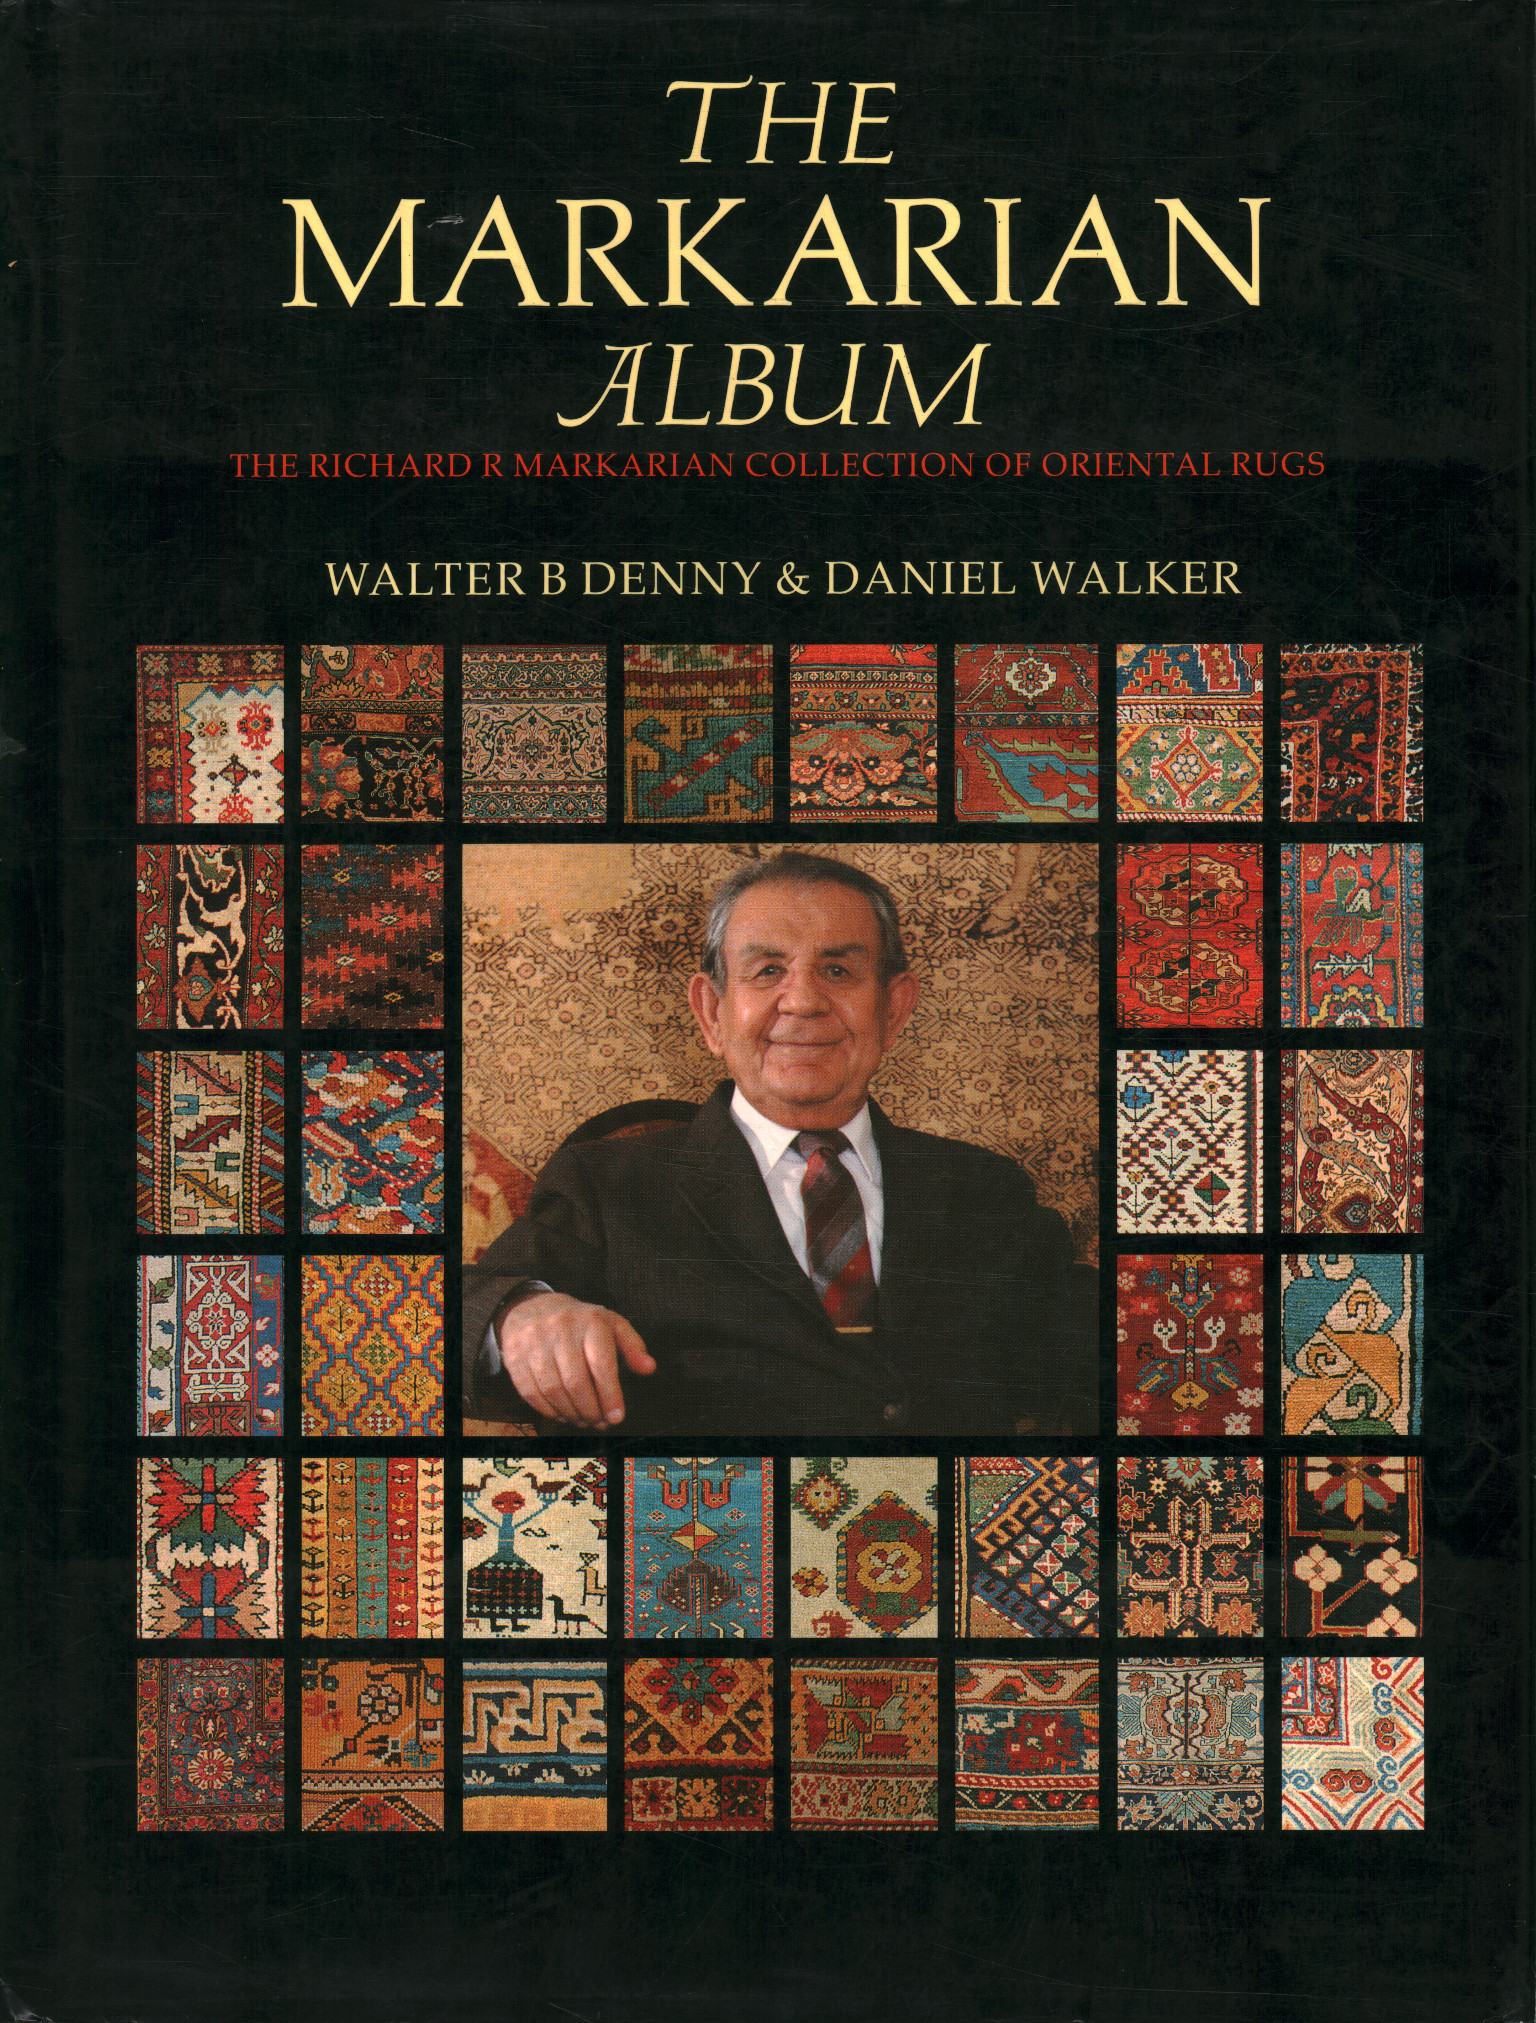 The Markarian Album